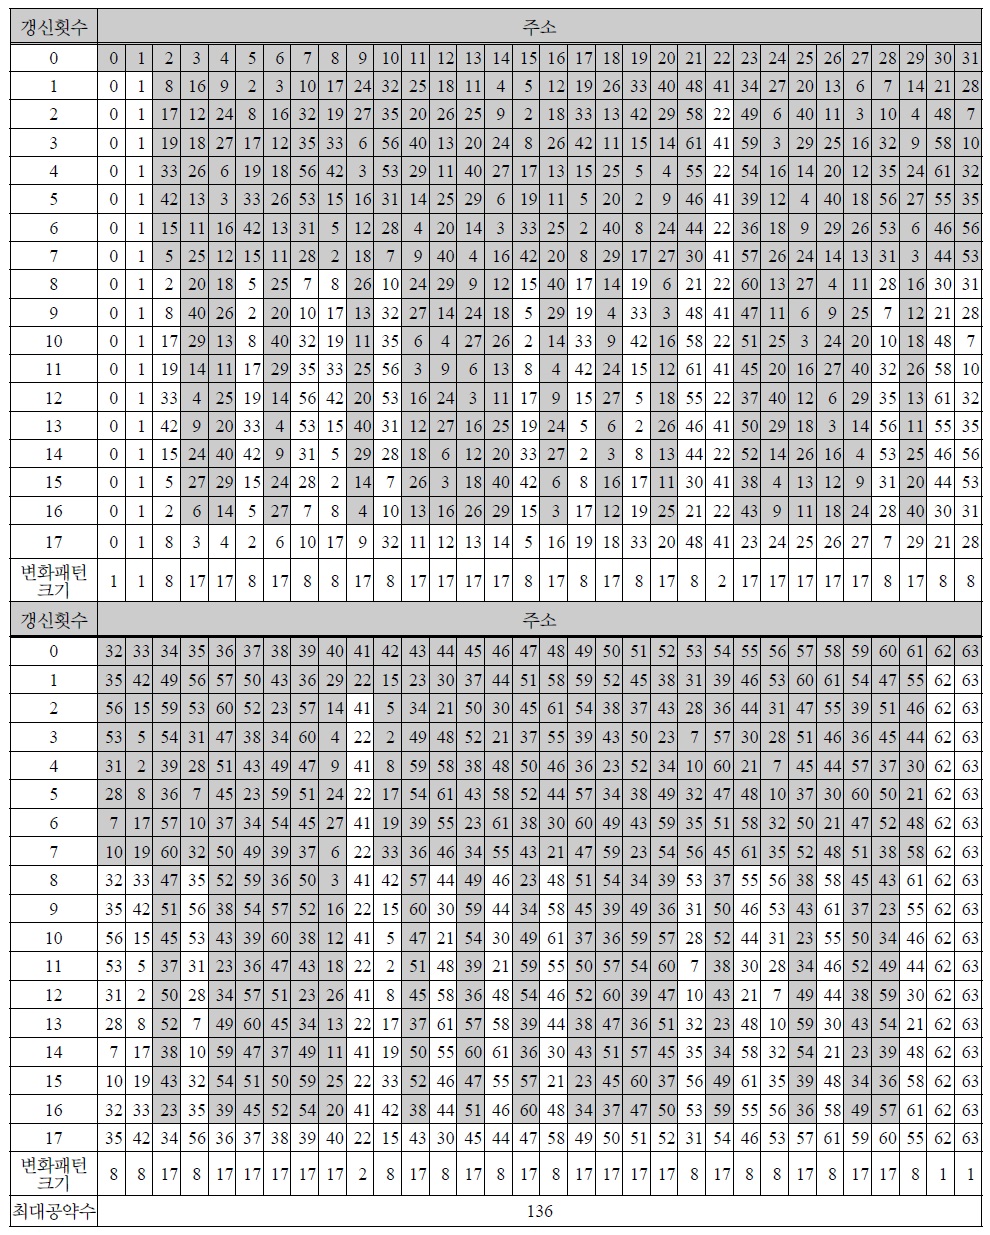 8x8 지그재그 스캔에서 처리순서에 따른 물리적 주소의 변화패턴